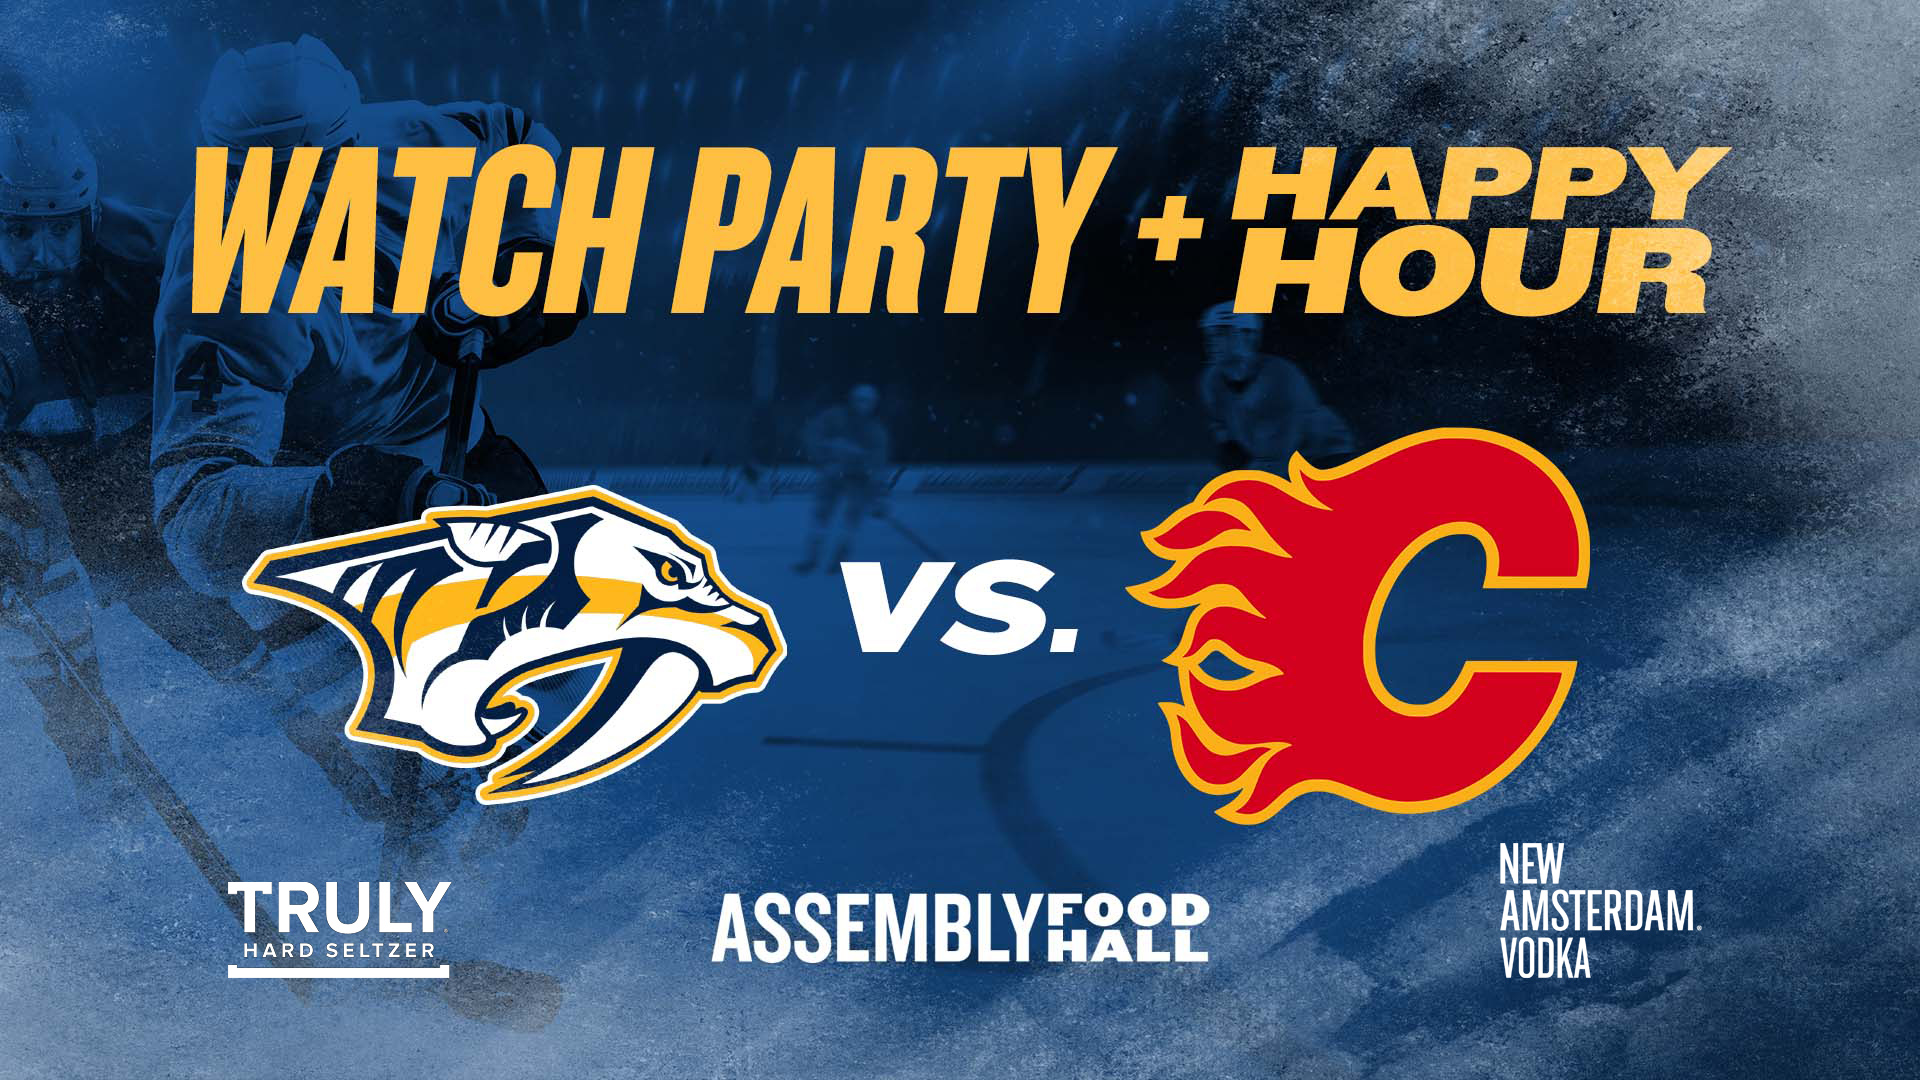 Promo image of Predators vs Flames Watch Party & Happy Hour